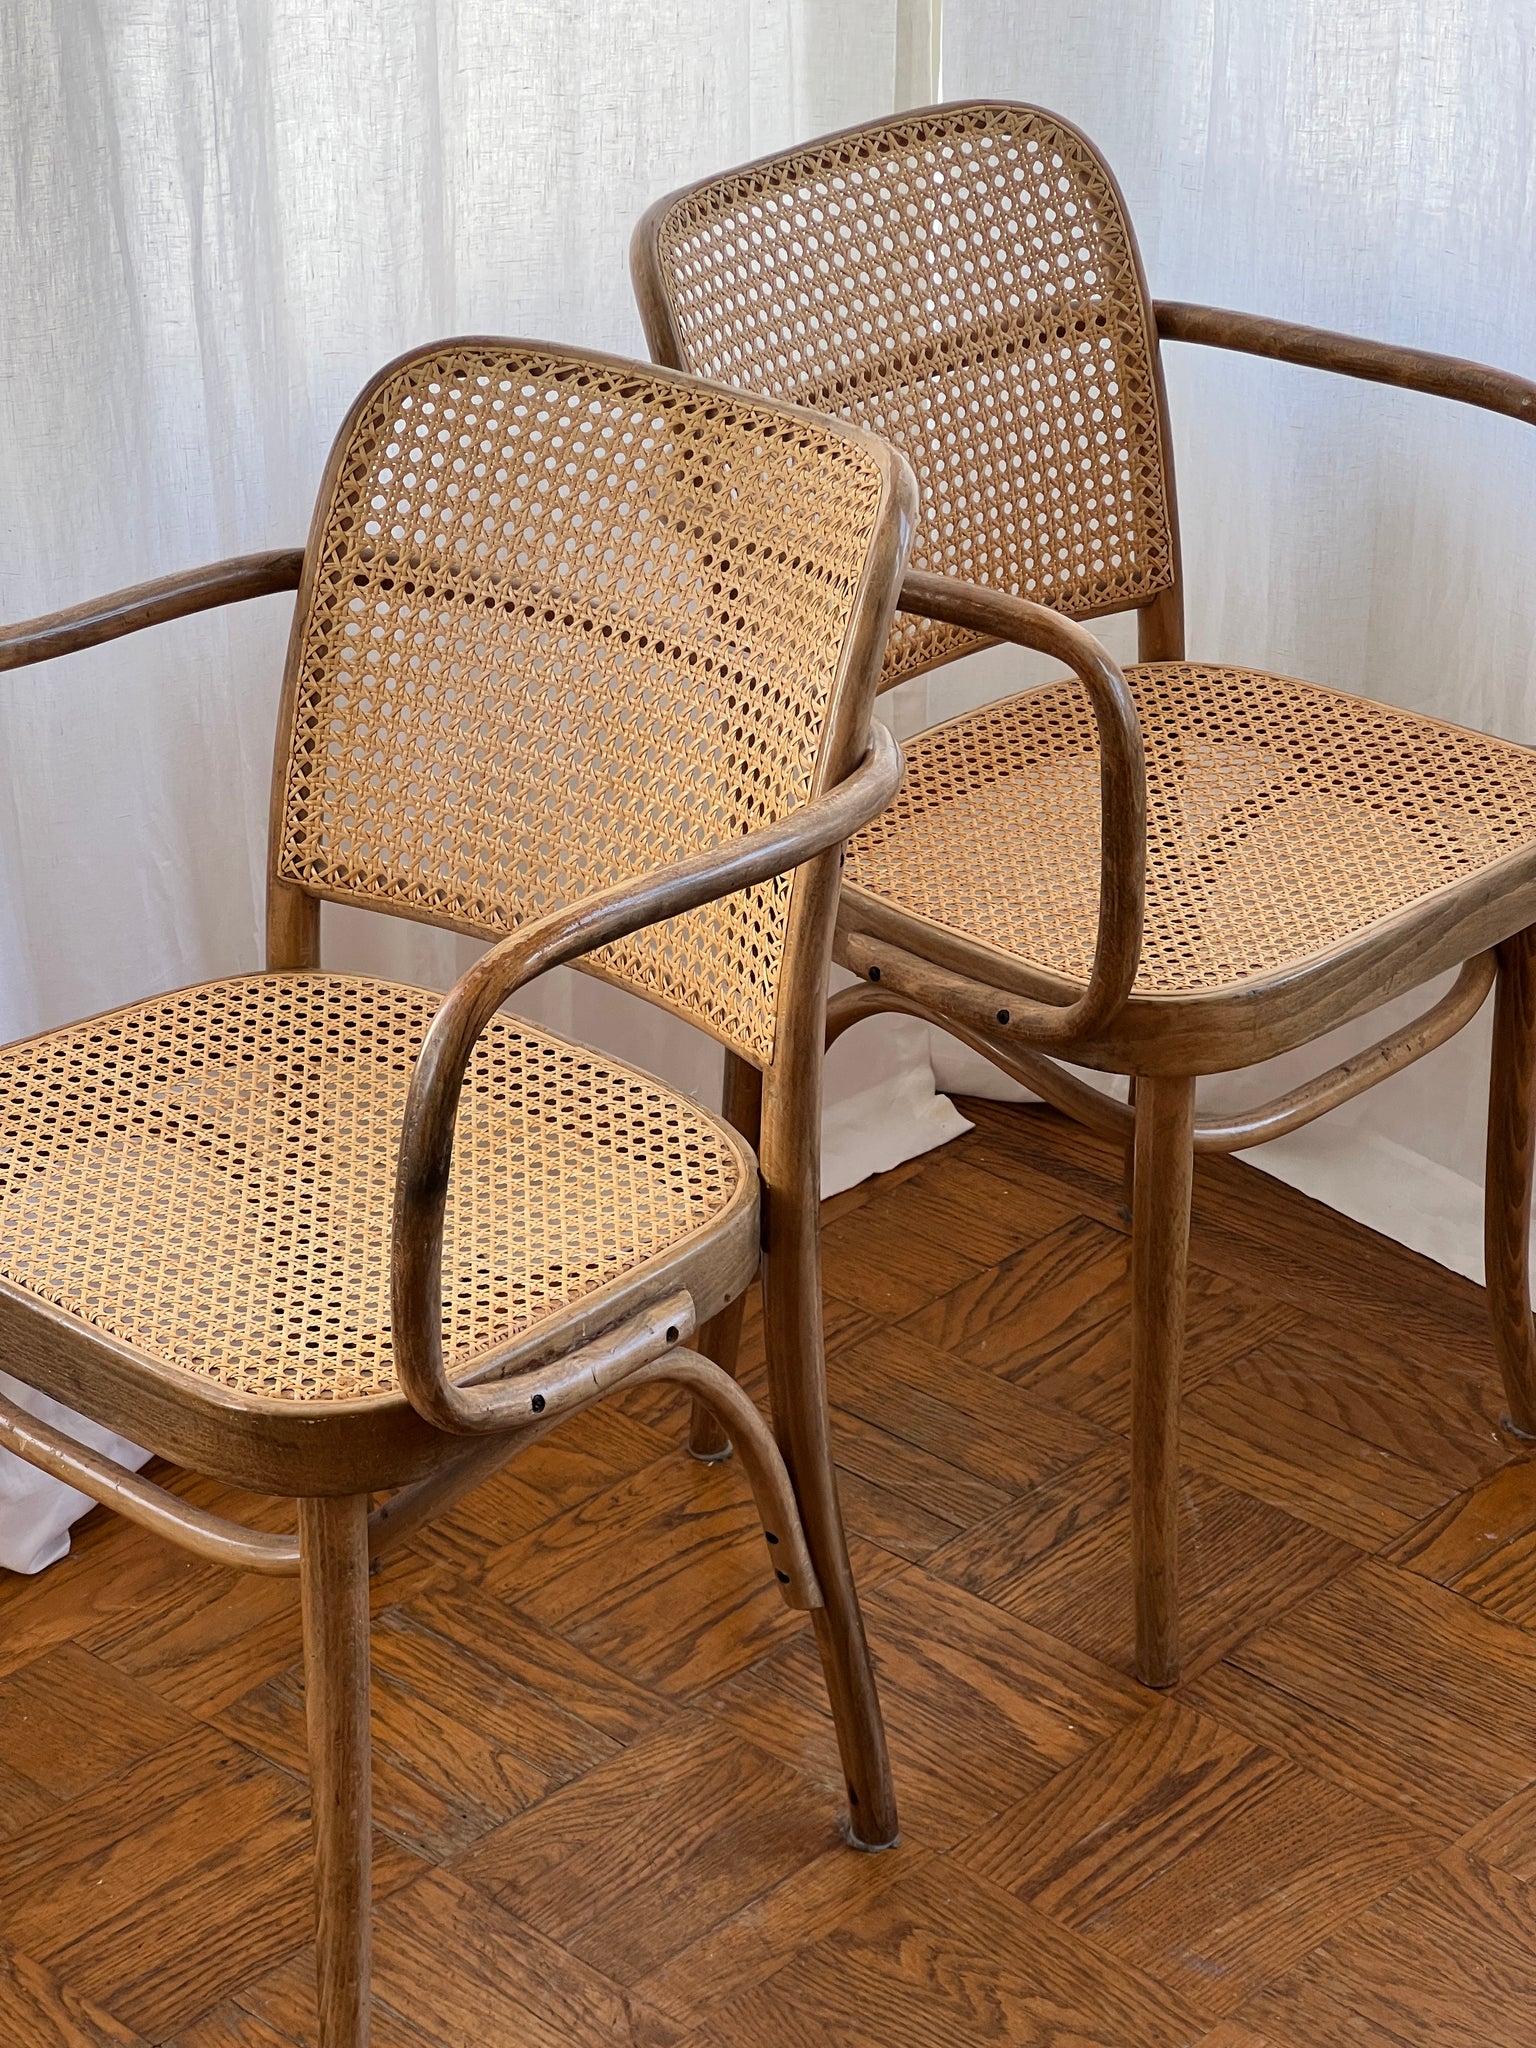 1950s Thonet No. 811 Prague Arm Chairs by Josef Hoffman